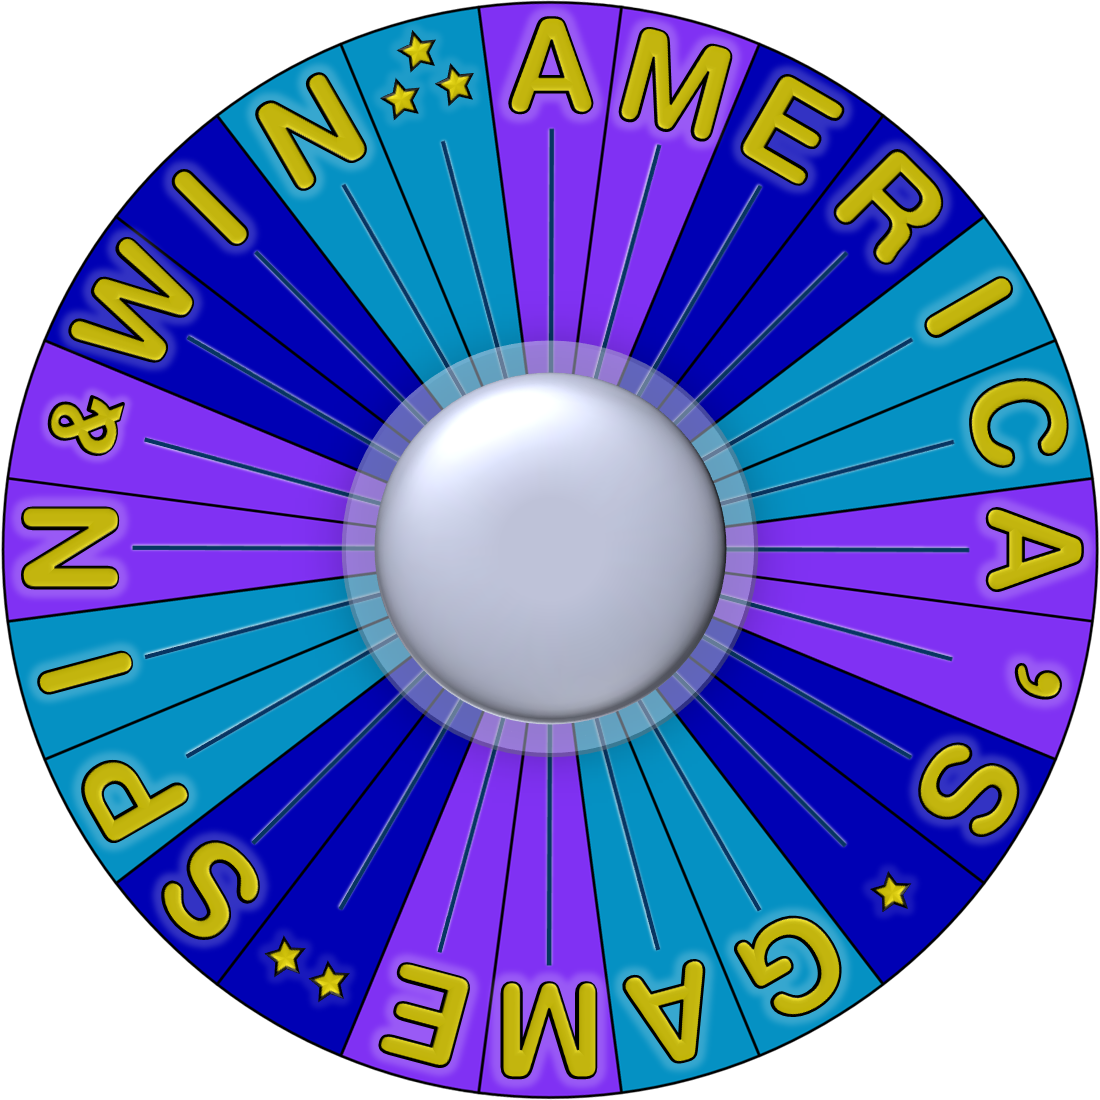 Image - Bonus Wheel S31.png | Game Shows Wiki | Fandom powered by Wikia